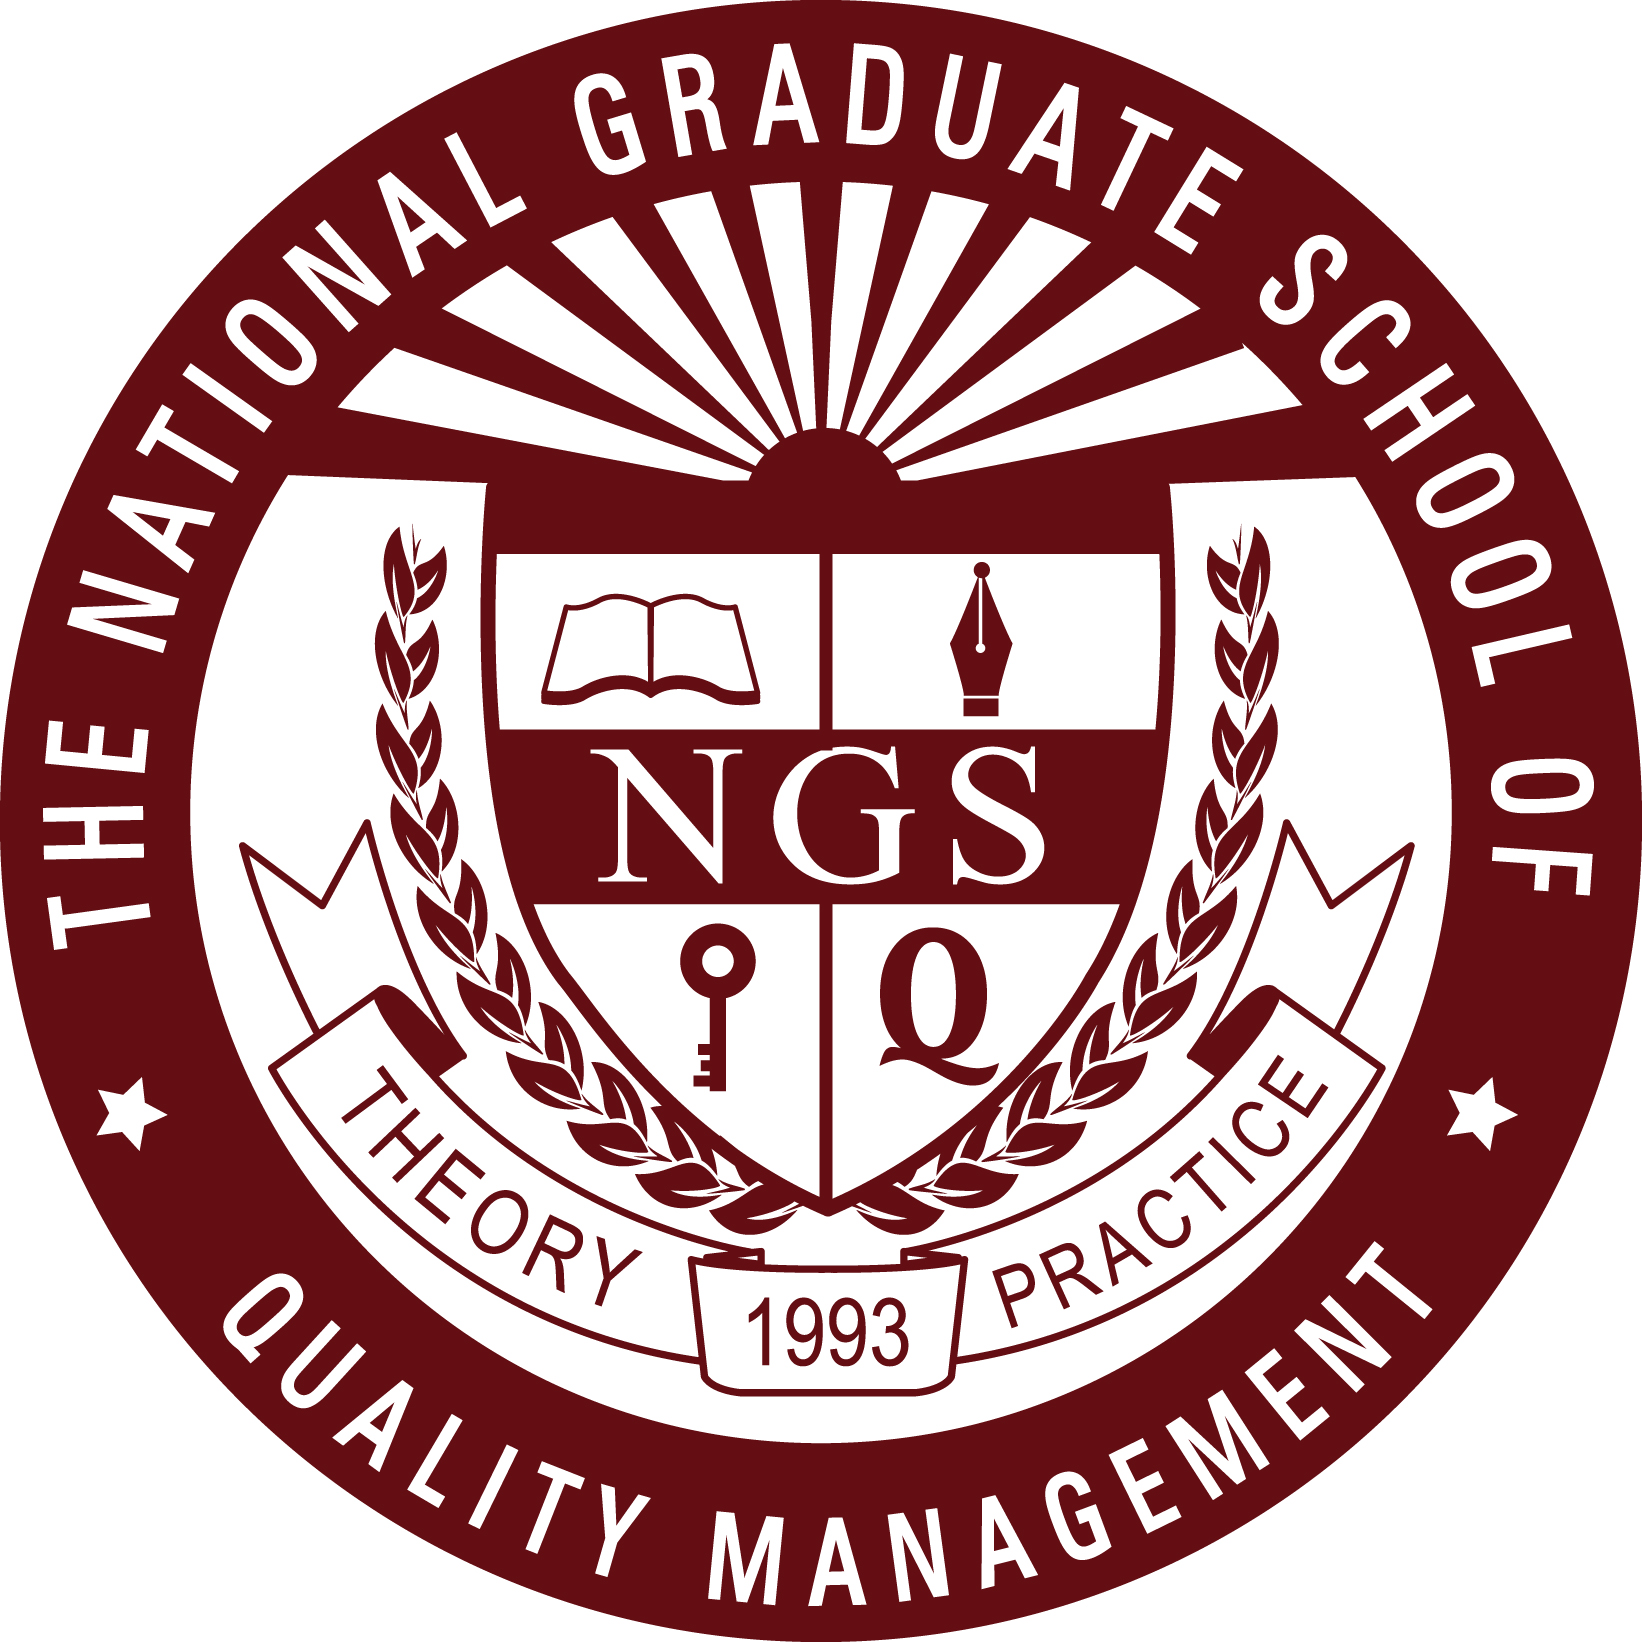 The National Graduate School